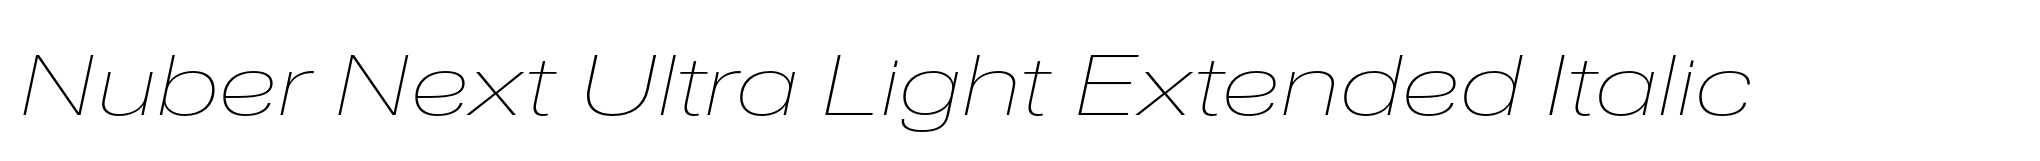 Nuber Next Ultra Light Extended Italic image